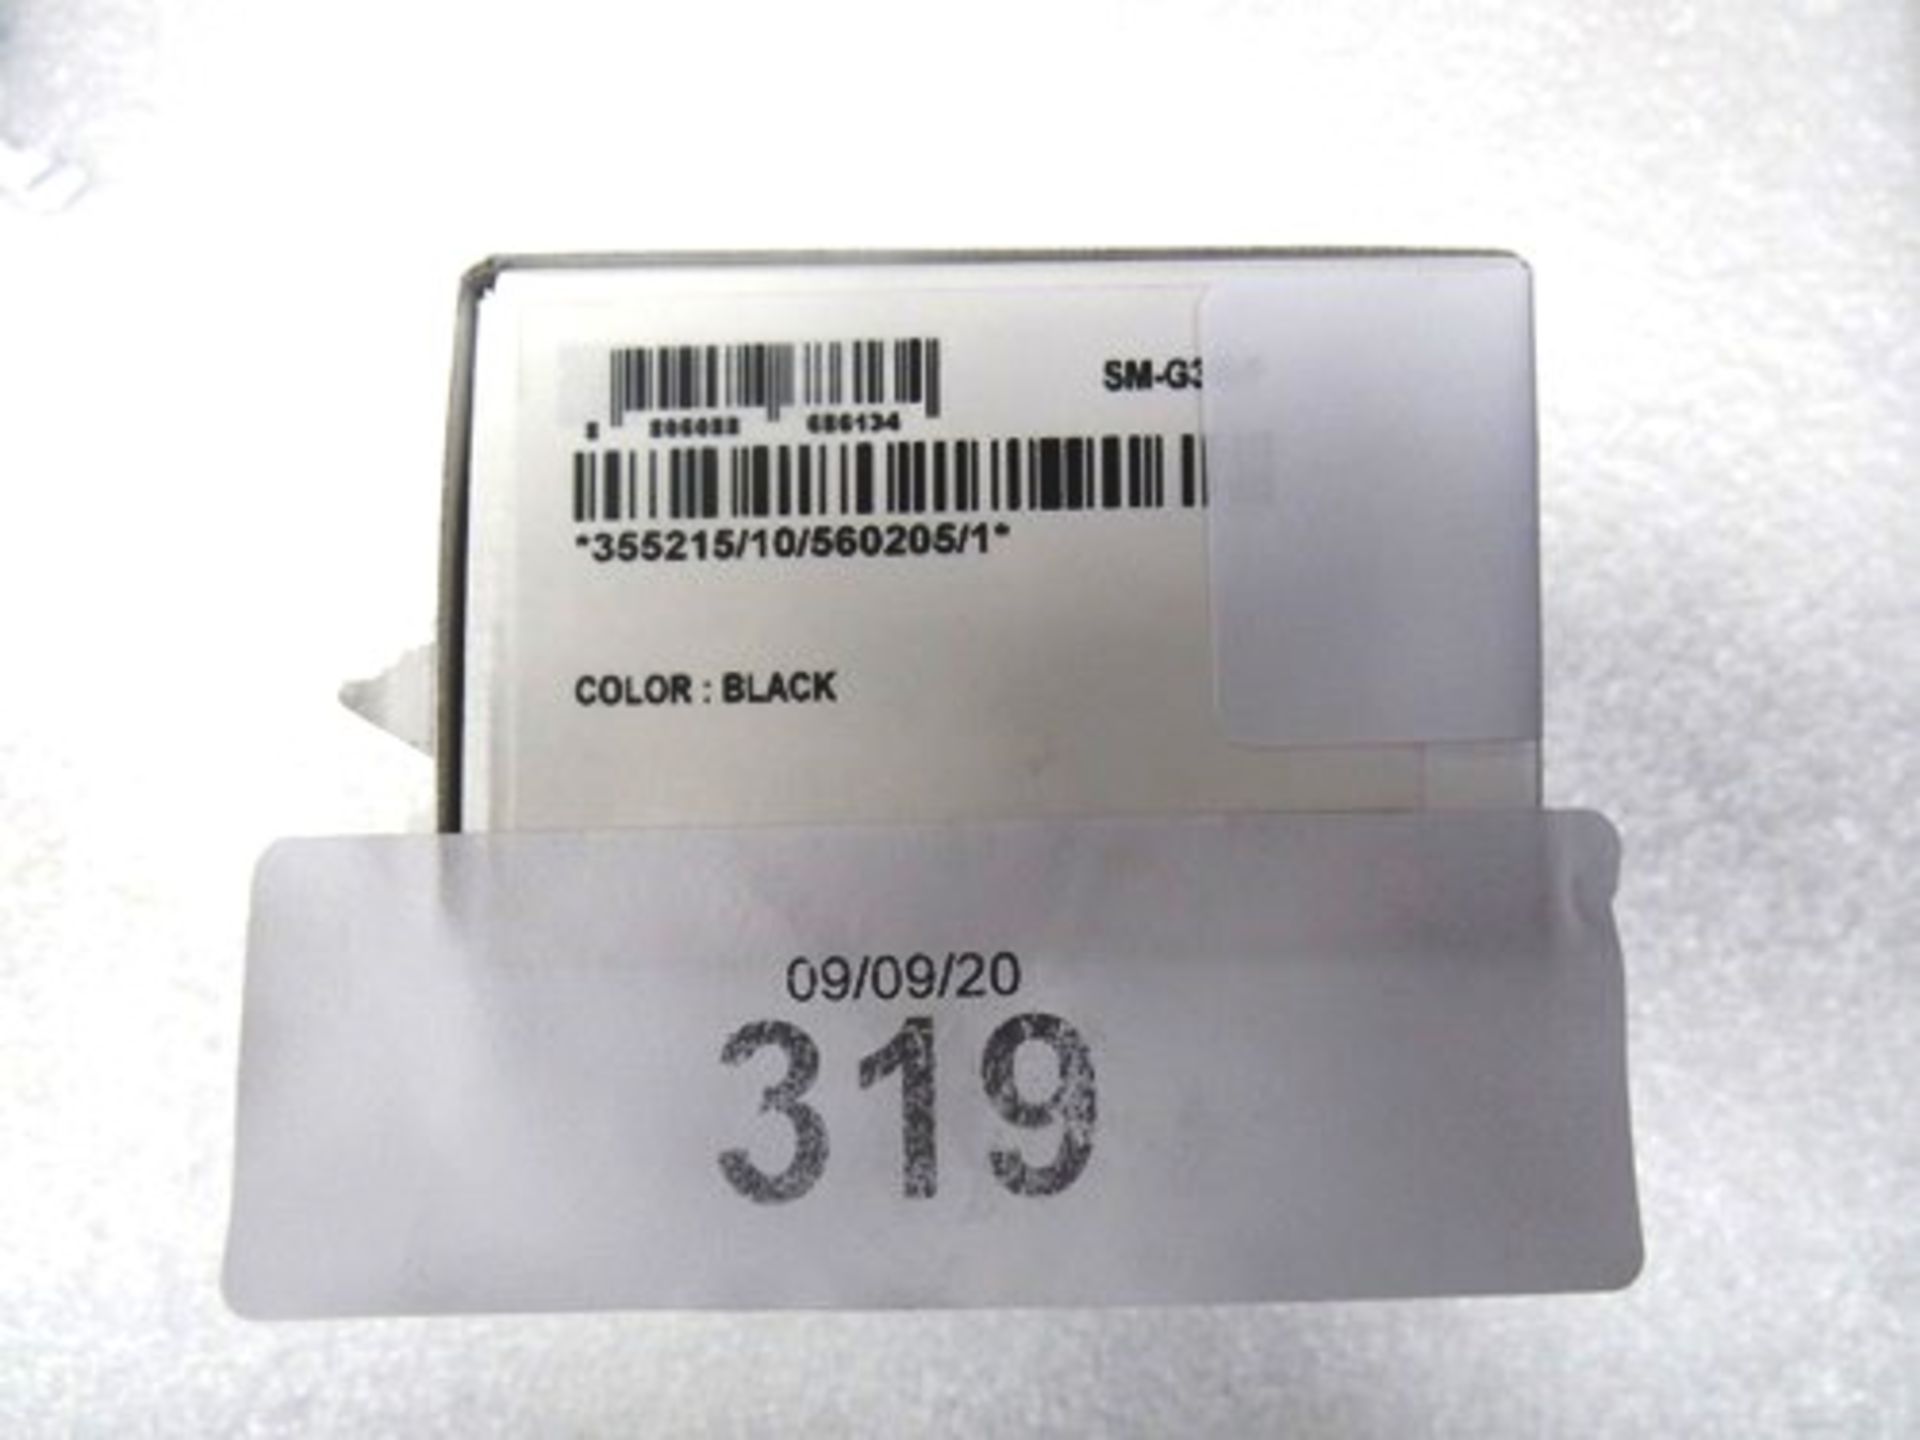 A black Samsung 16gb Galaxy XCover 4 smart phone, model SM-G390F, IMEI: 355215/10 560205/1 - - Image 2 of 2